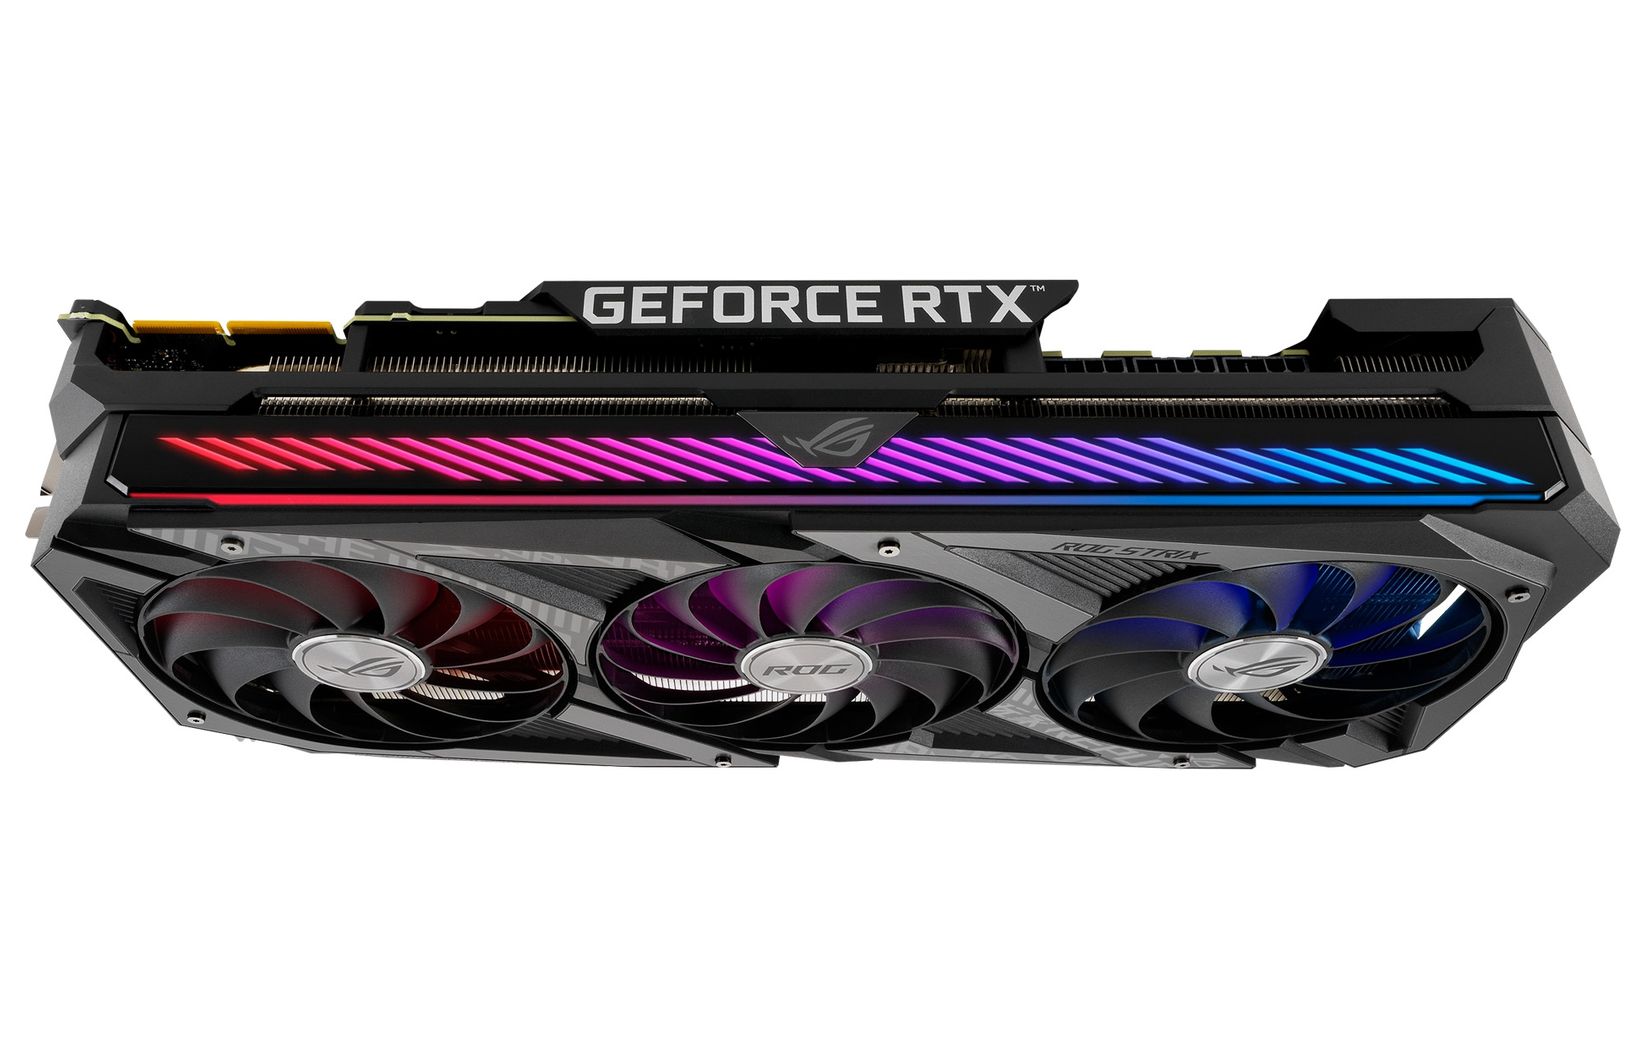 asus rtx 30 strix 4 videocardz เอซุสประกาศเปิดตัวการ์ดจอ Nvidia GeForce RTX 30ซีรี่ย์รุ่นใหม่ล่าสุด 5รุ่น ROG Strix GeForce RTX 3090 , ASUS TUF Gaming GeForce RTX 3090 , GeForce RTX 3080 , ROG Strix GeForce RTX 3070 และ ASUS Dual GeForce RTX 3070 อย่างเป็นทางการ